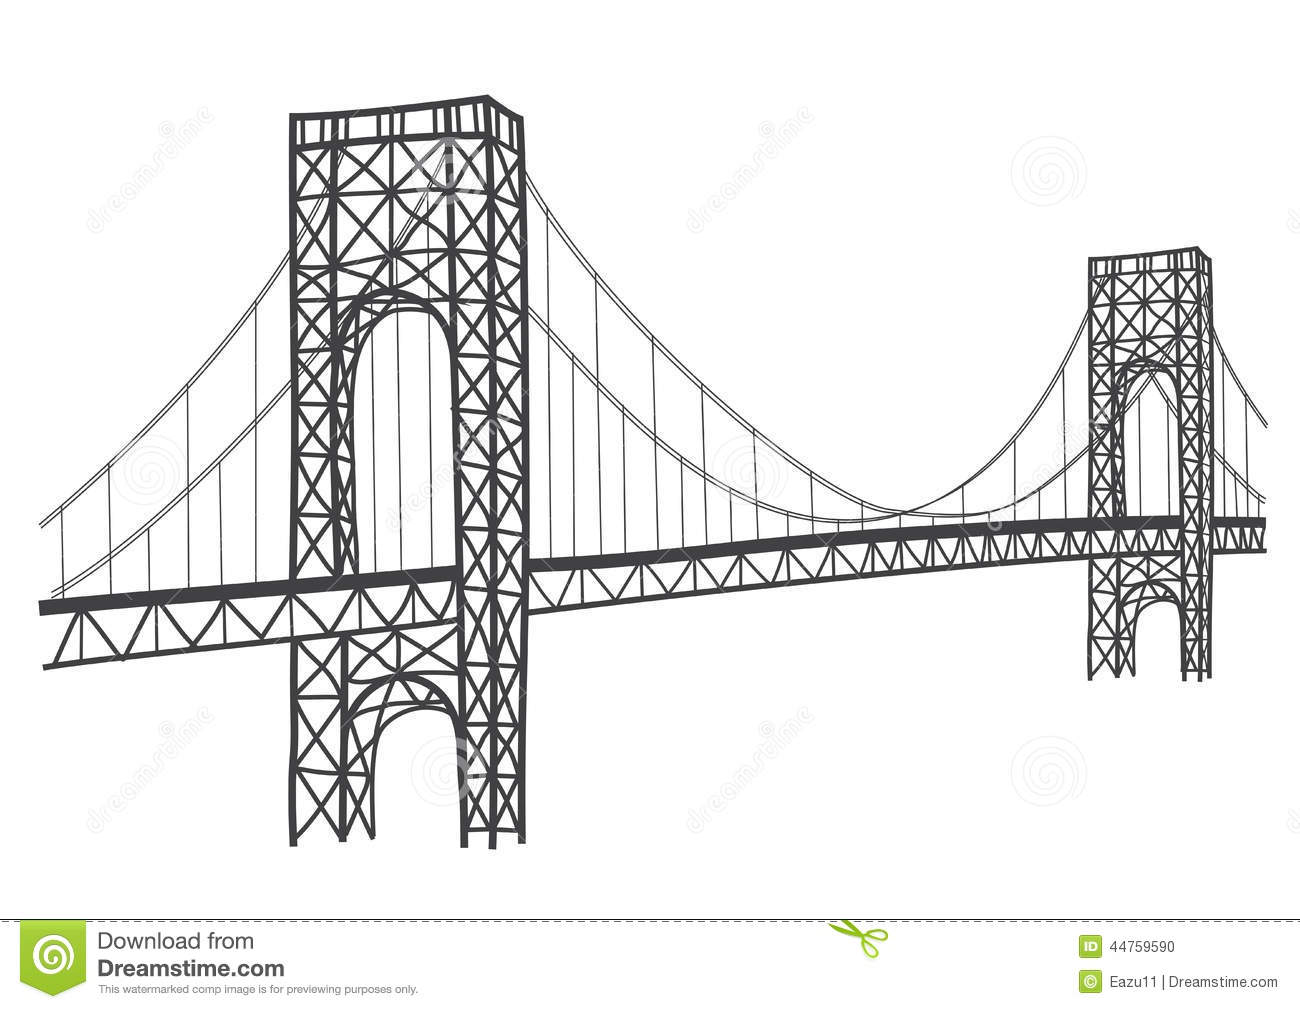 ... Bridge - Illustration of 